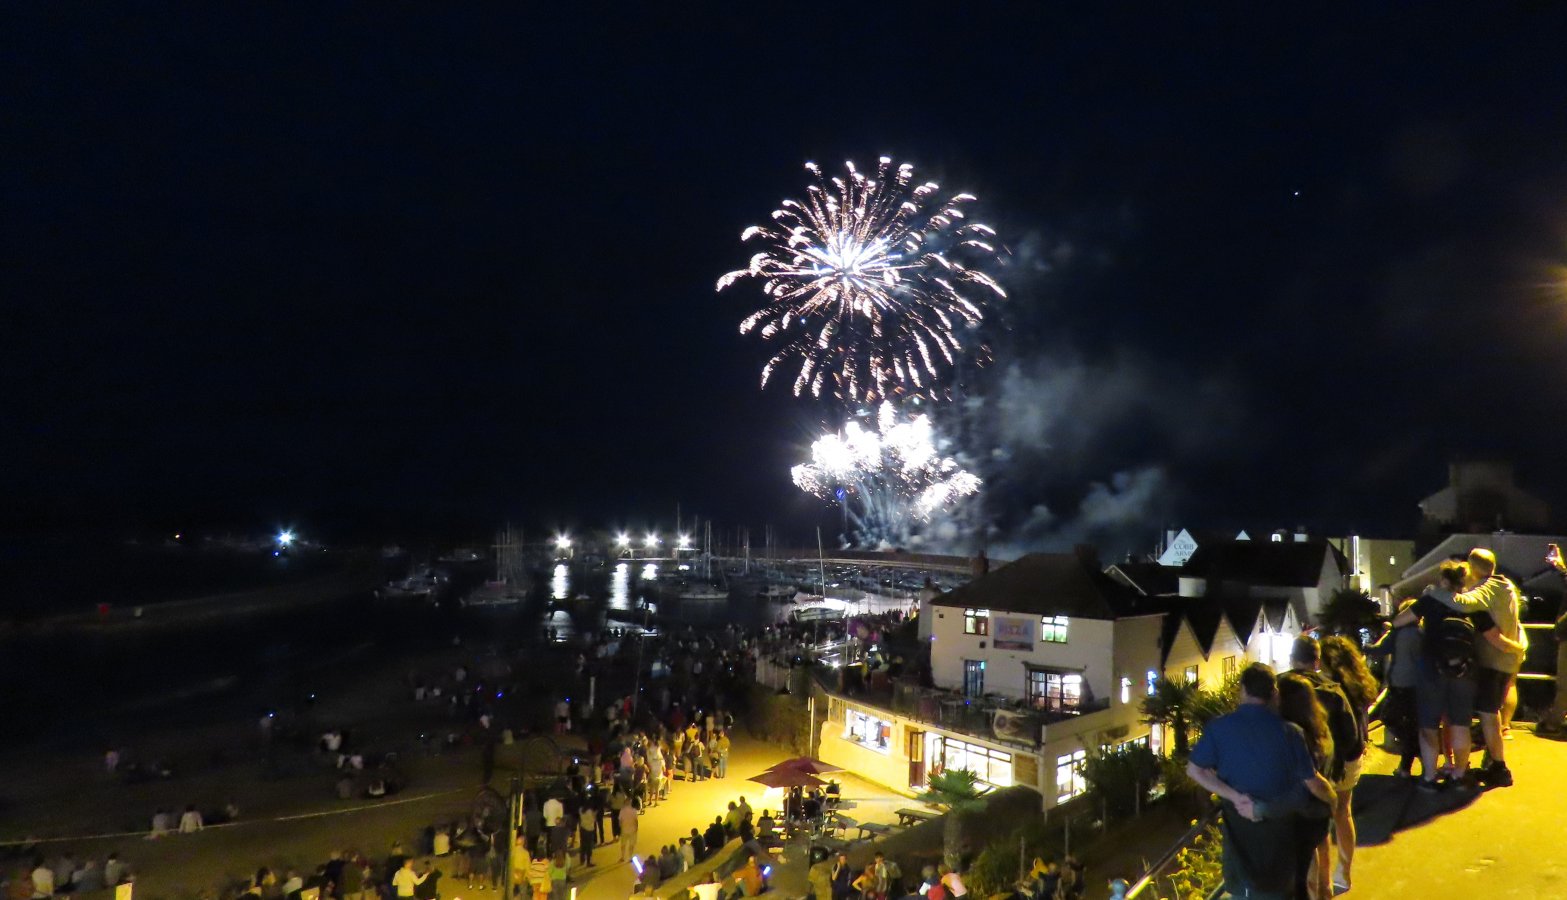 Lyme Regis Fireworks - Cobb